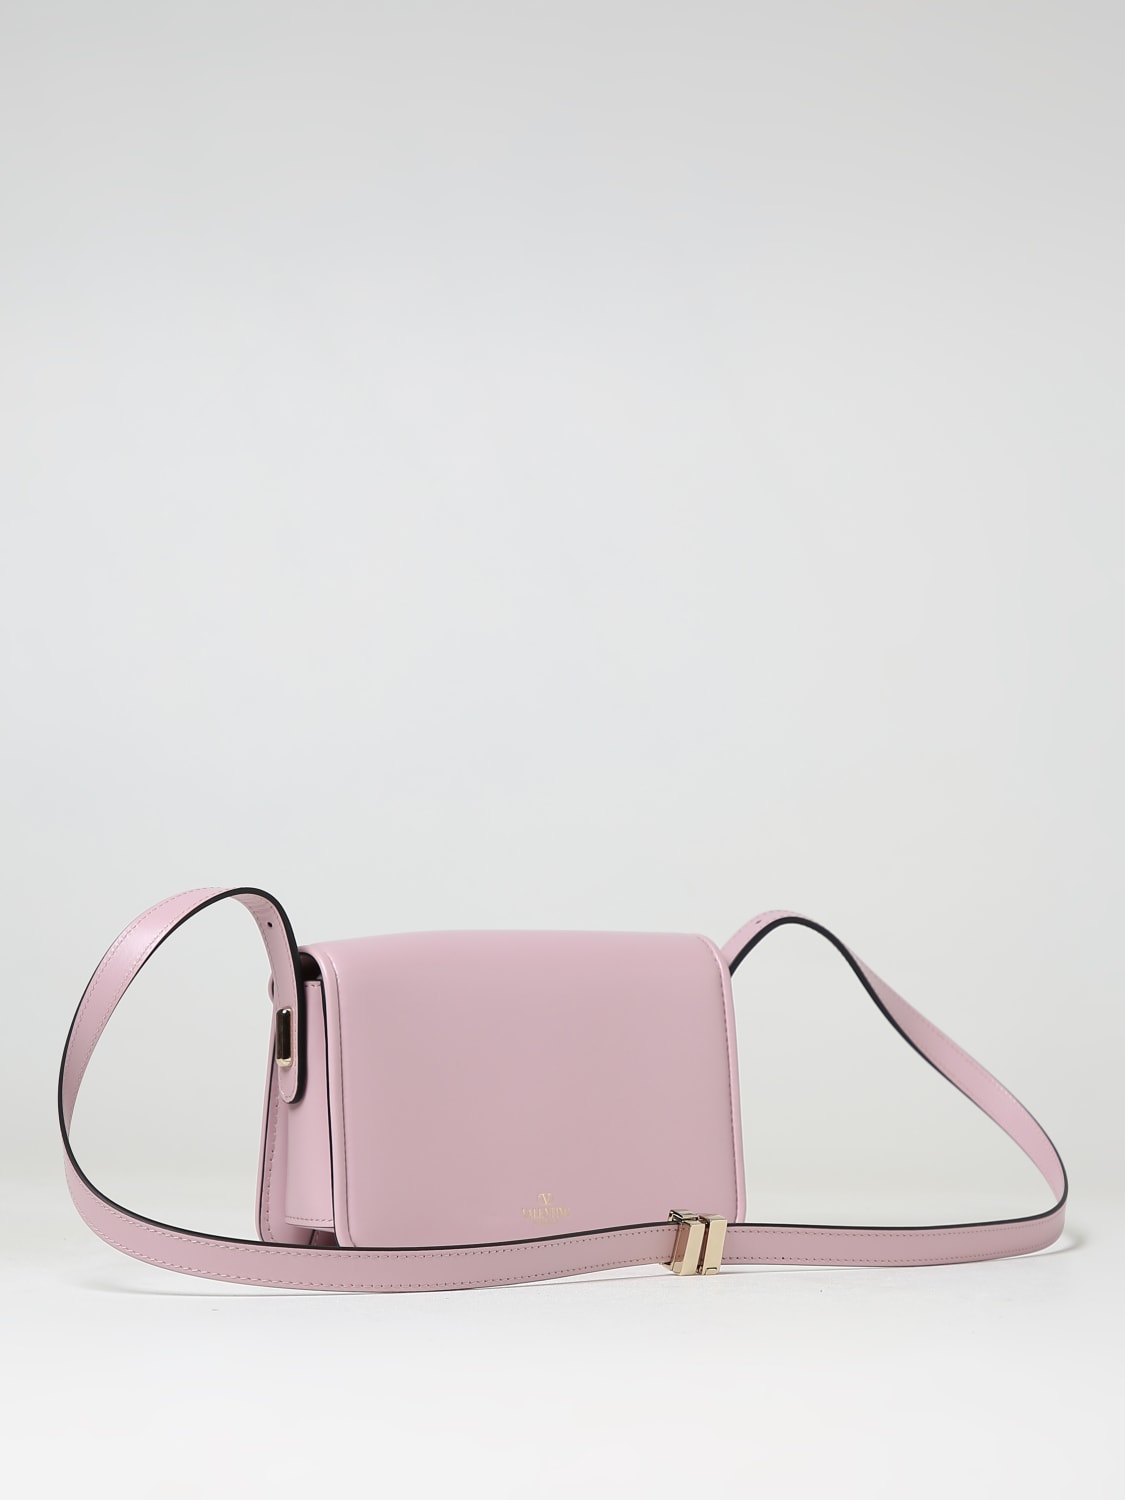 VALENTINO GARAVANI: Letter Bag in leather - Pink  Valentino Garavani mini  bag 3W2B0M59IAI online at